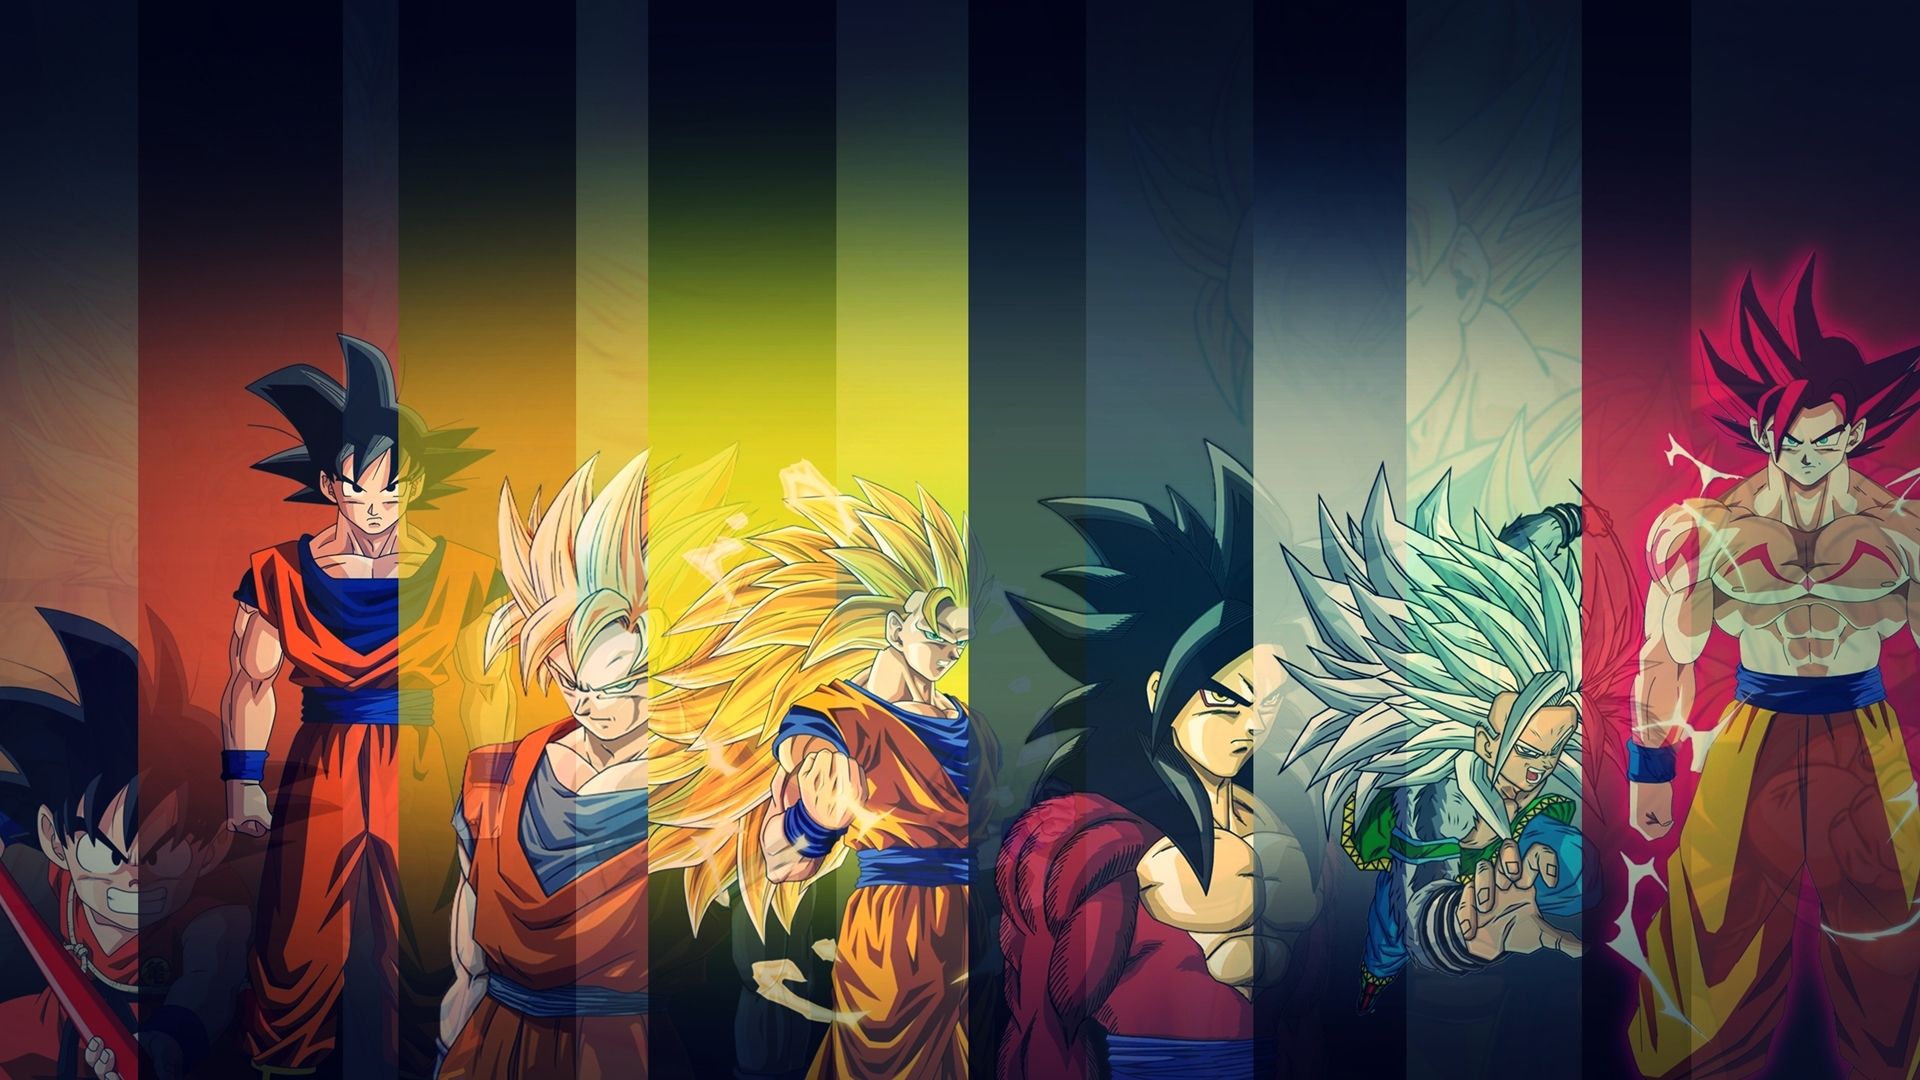 Best Goku Wallpaper